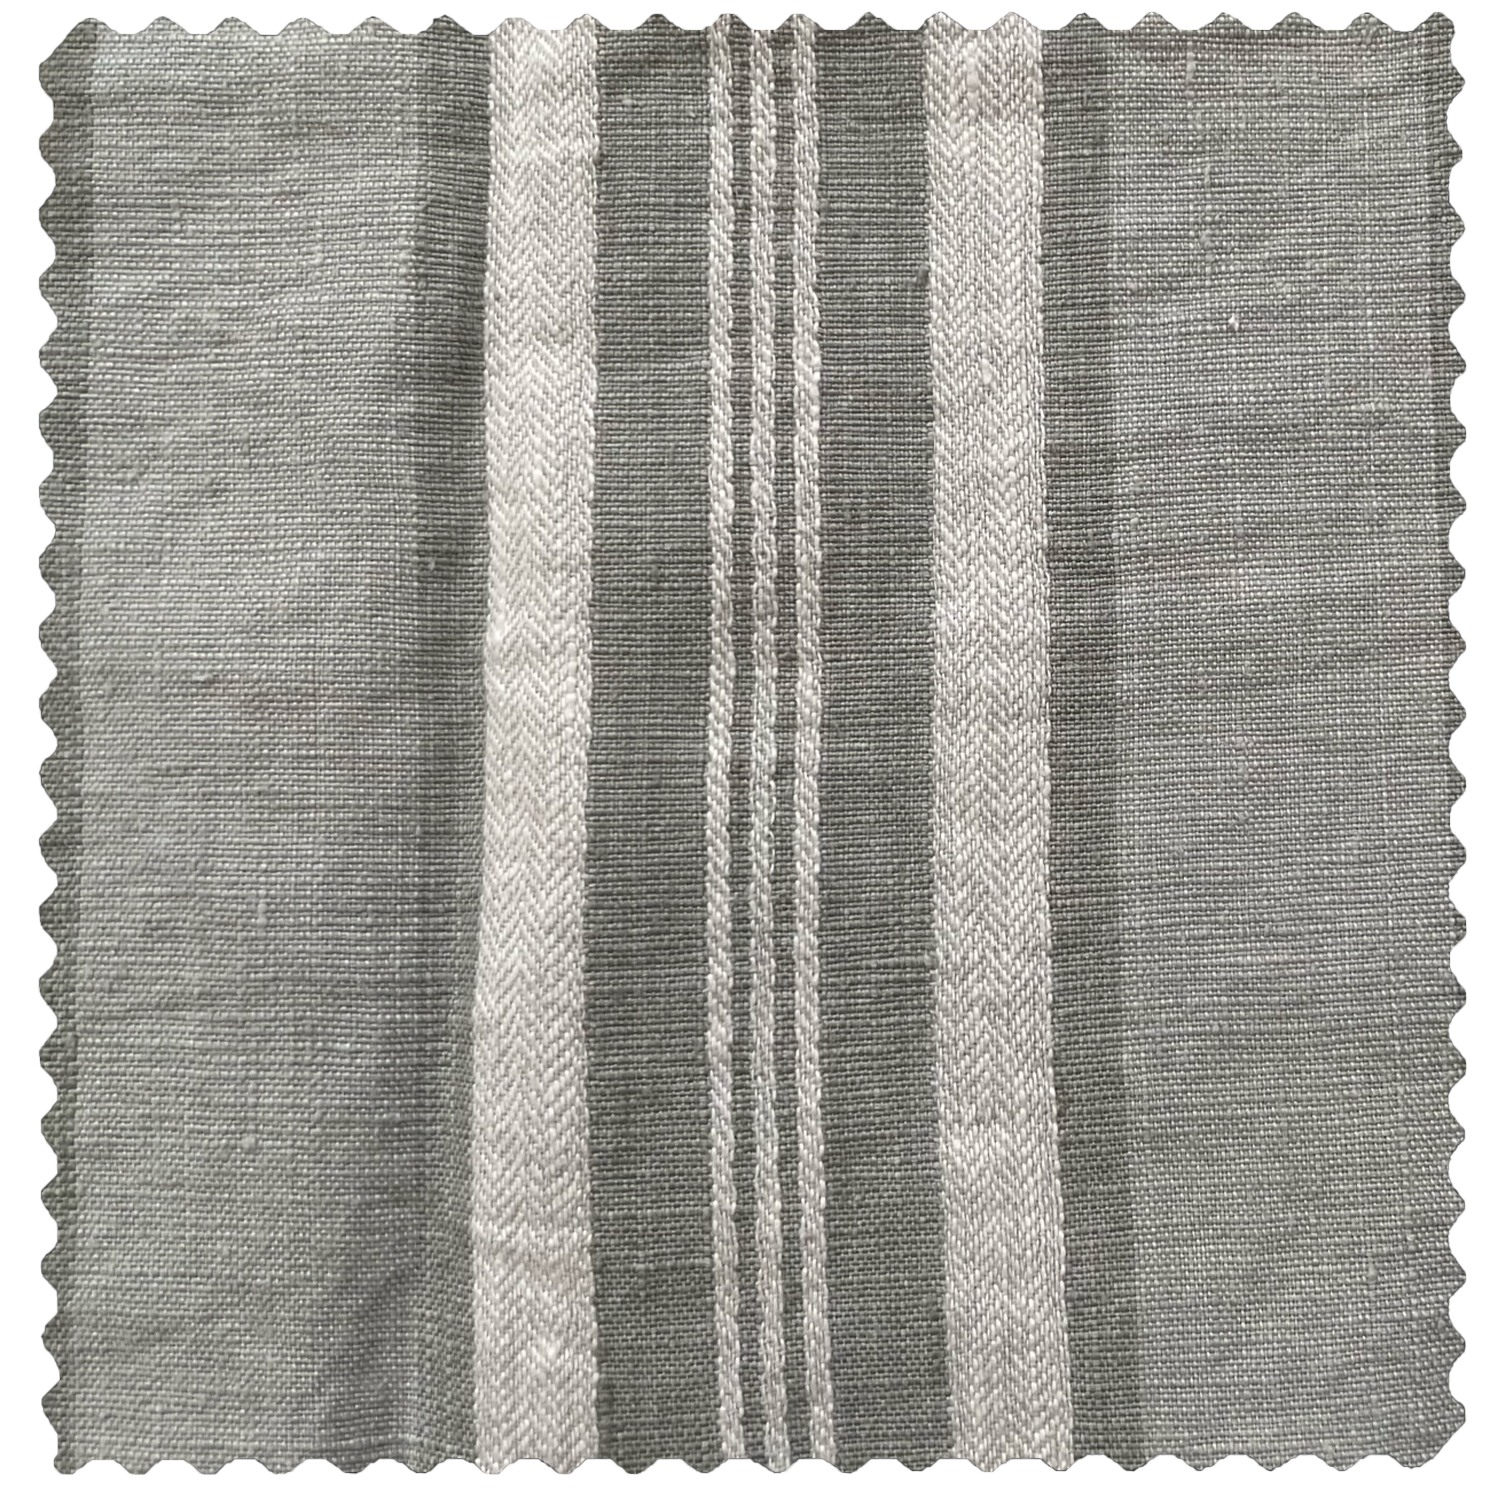 Twin / Puckered Stripe Teal Linen